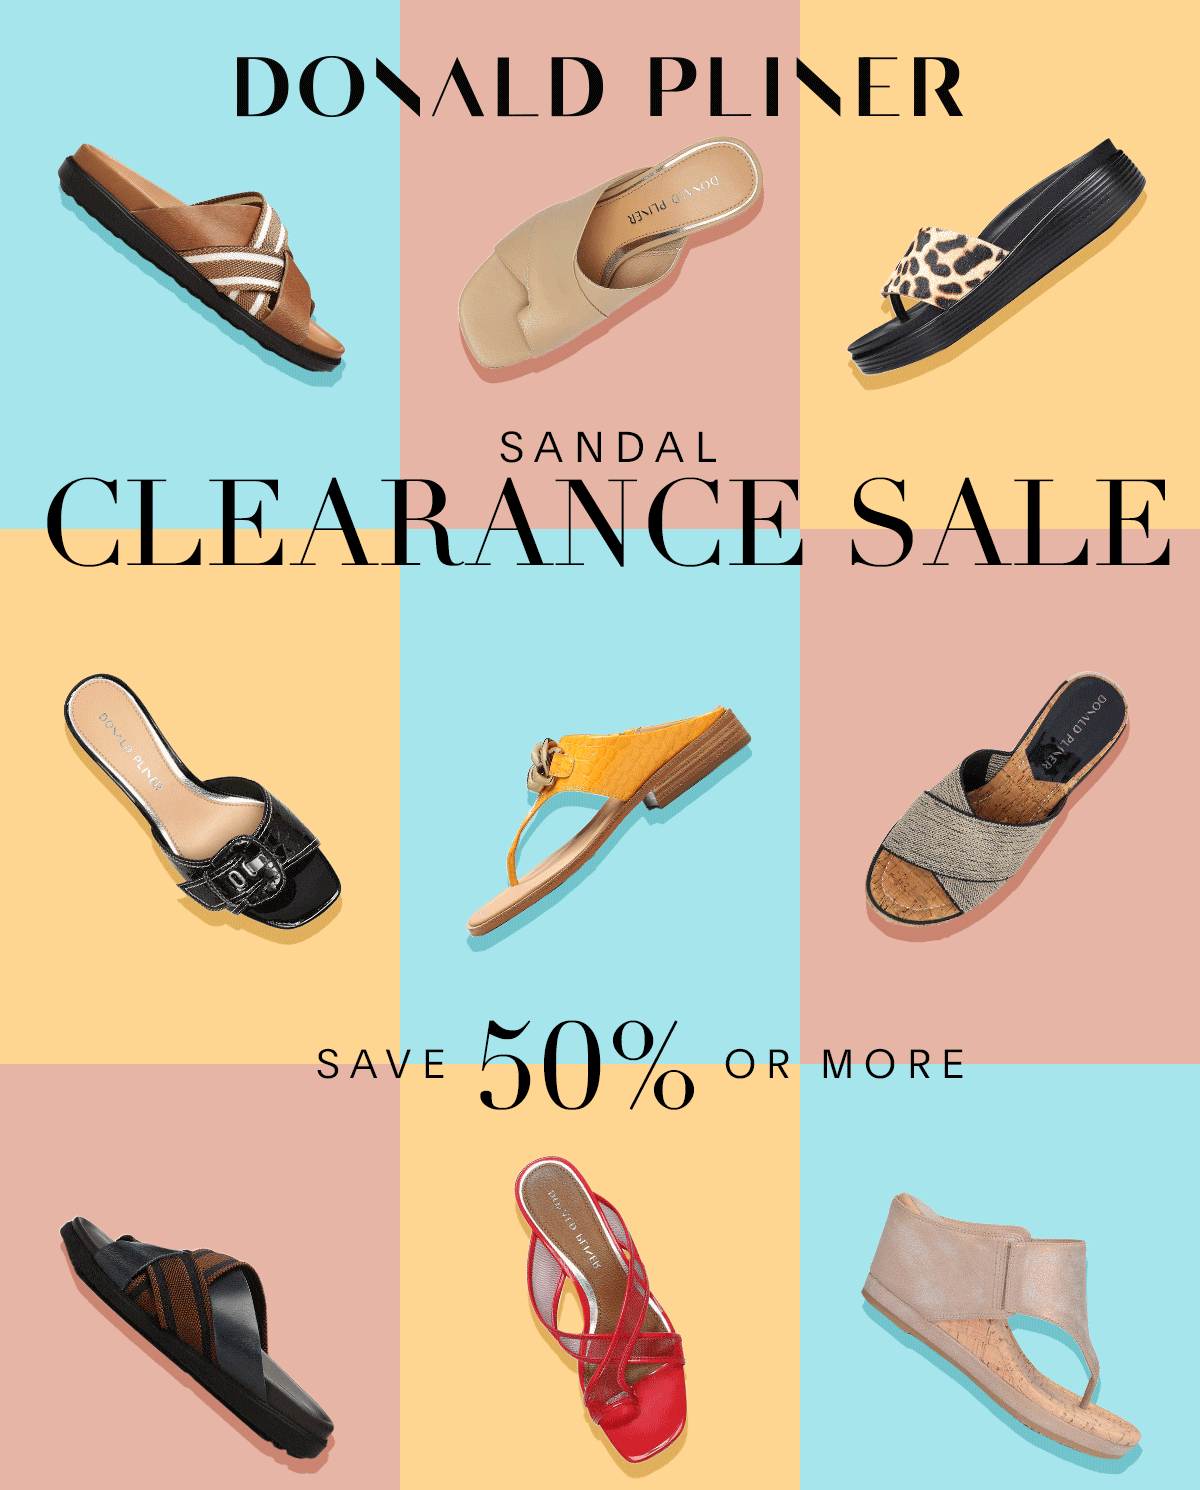 Donald Pliner. Sandal Clearance Sale. Save 50% or more.